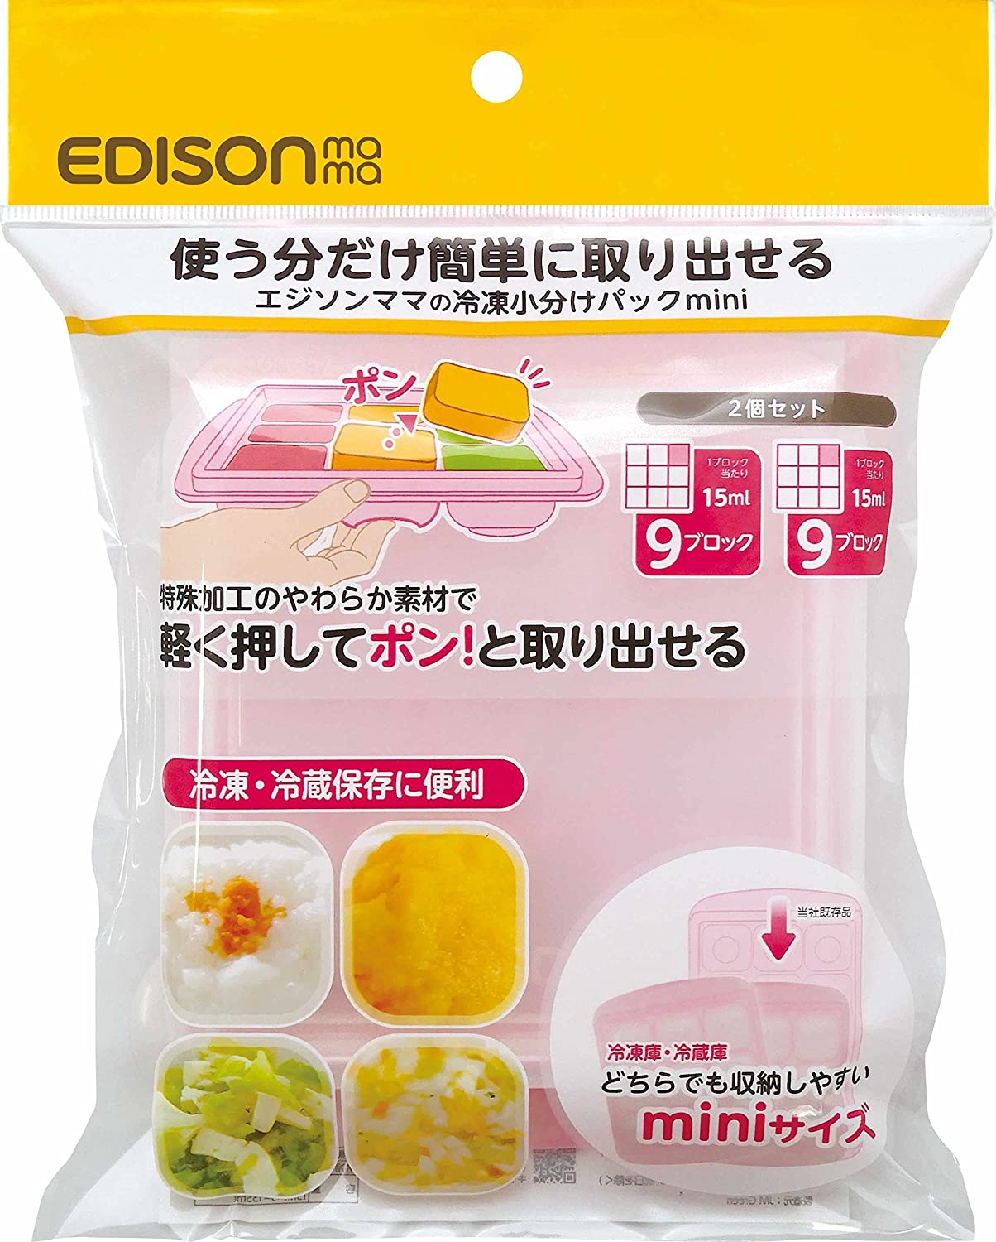 EDISONmama(エジソンママ) 冷凍小分けパックの商品画像1 